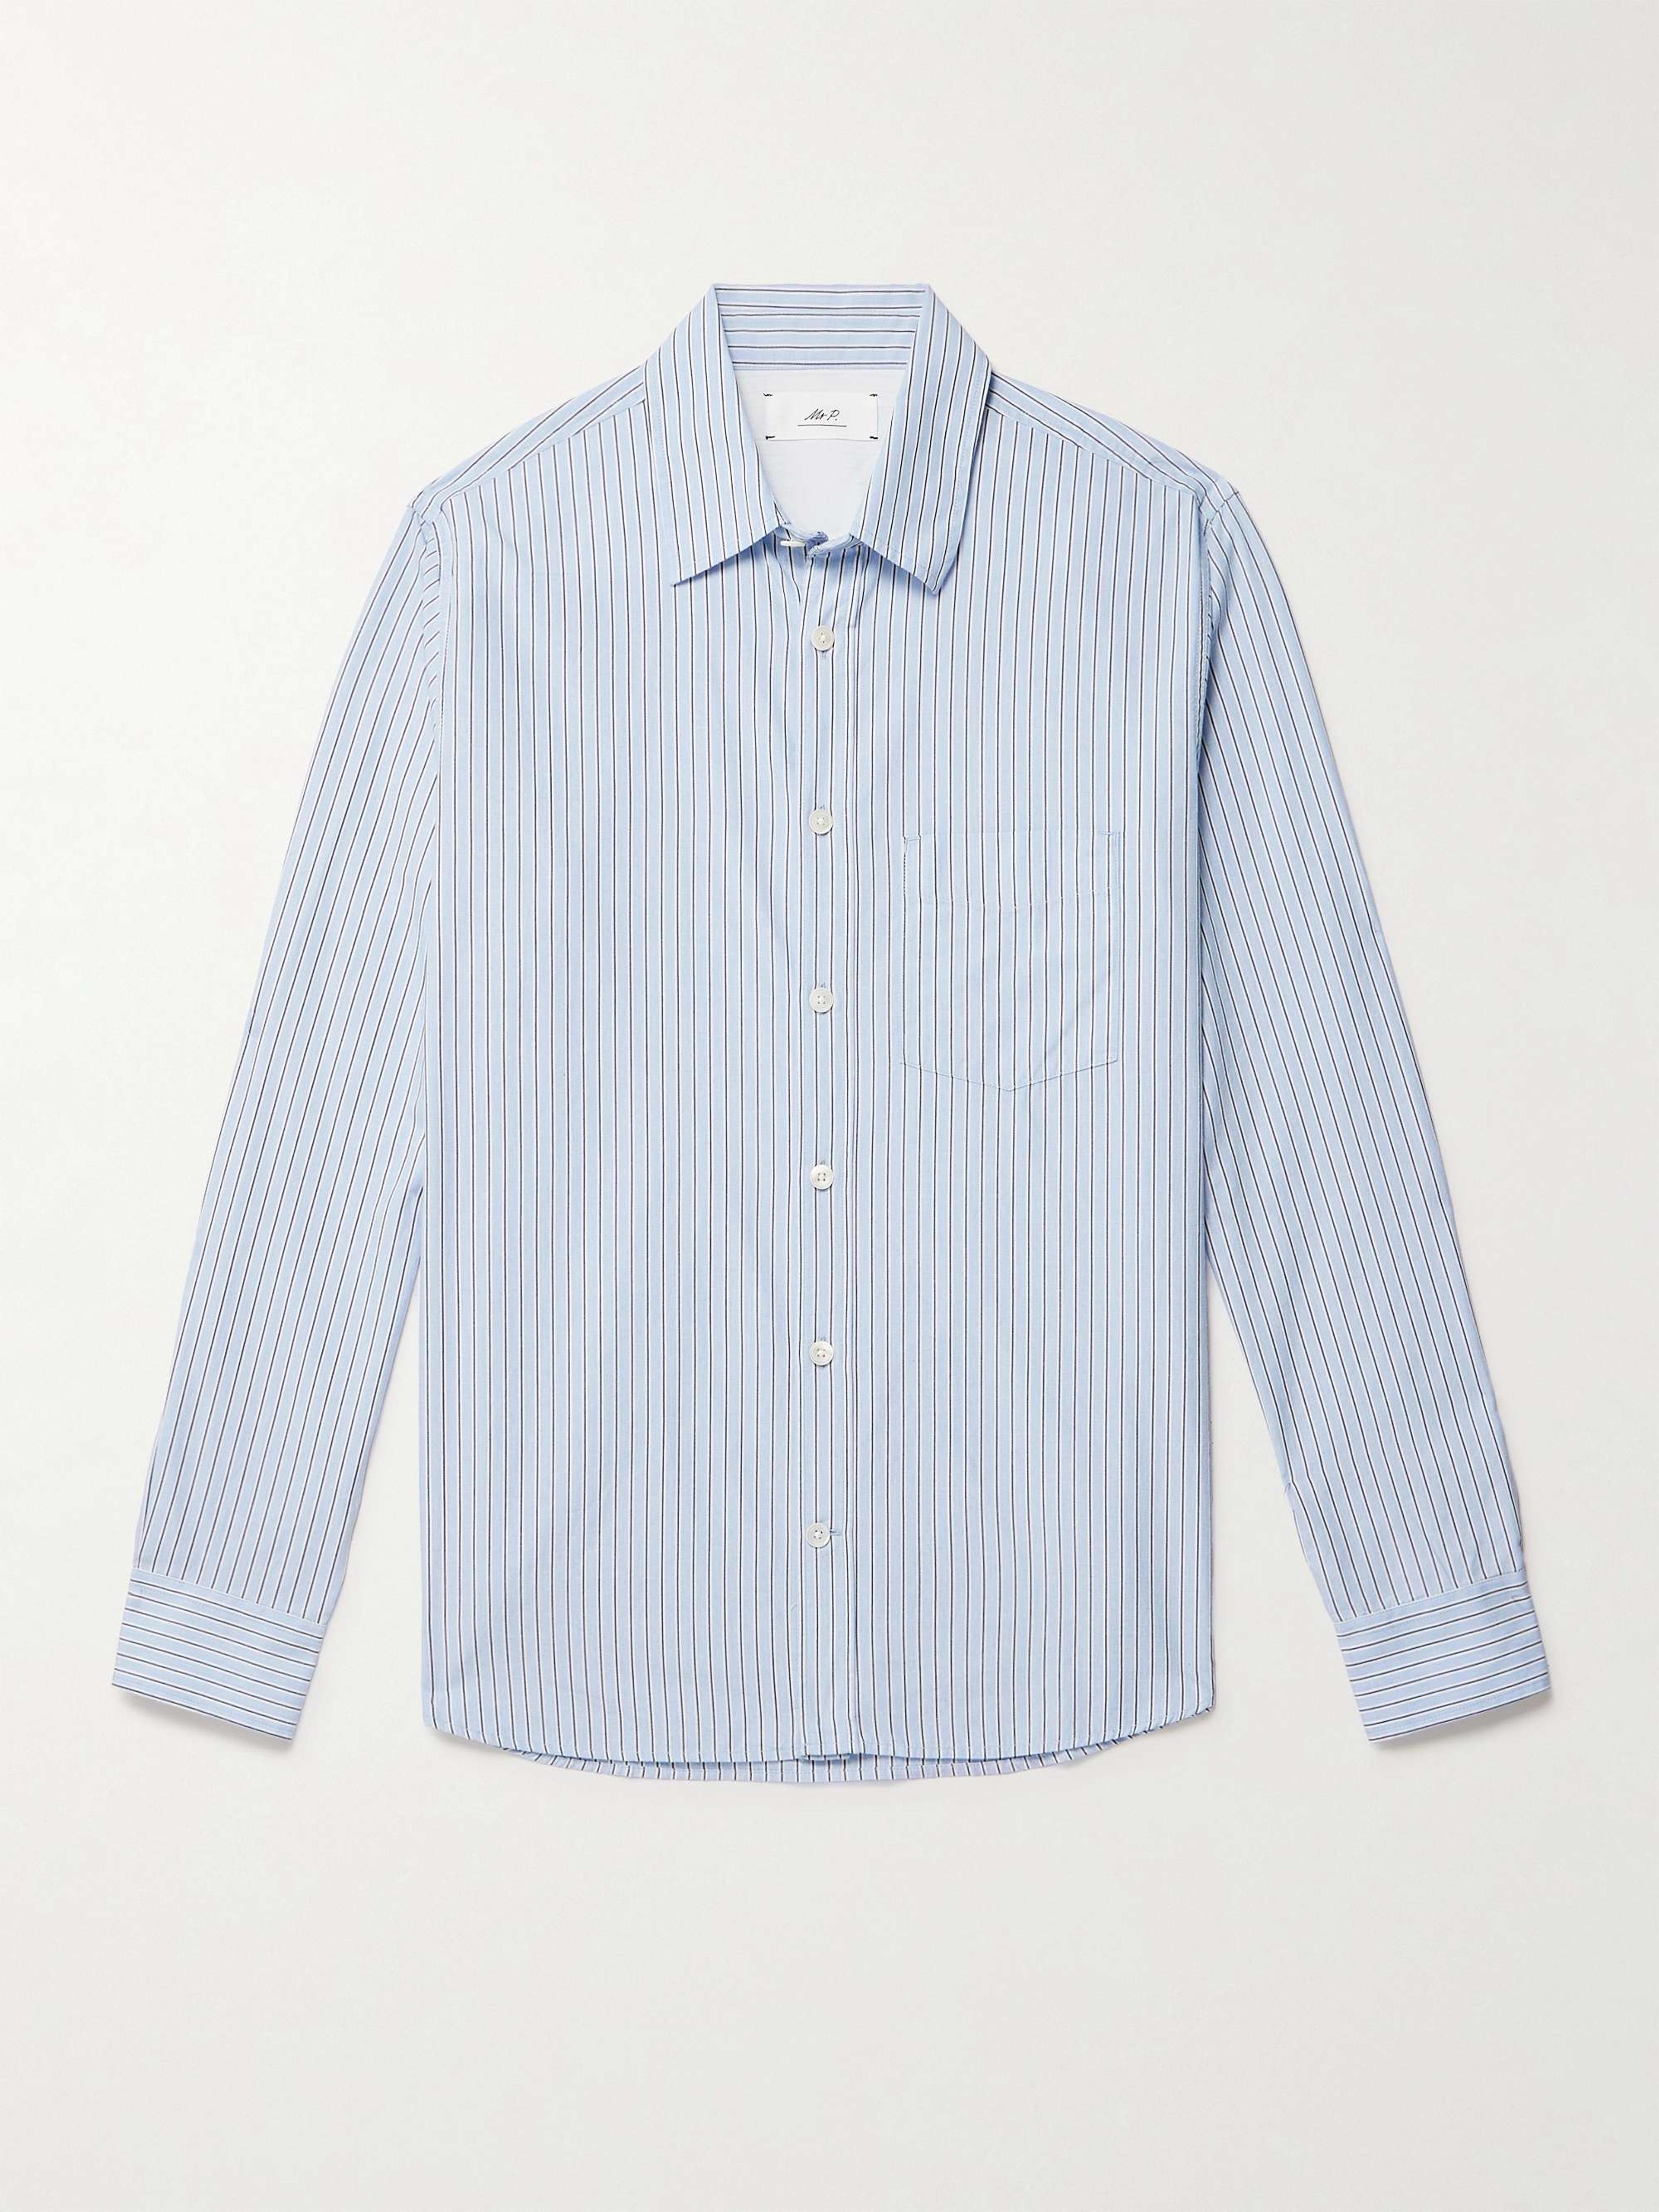 MR P. Pinstriped Cotton Oxford Shirt for Men | MR PORTER